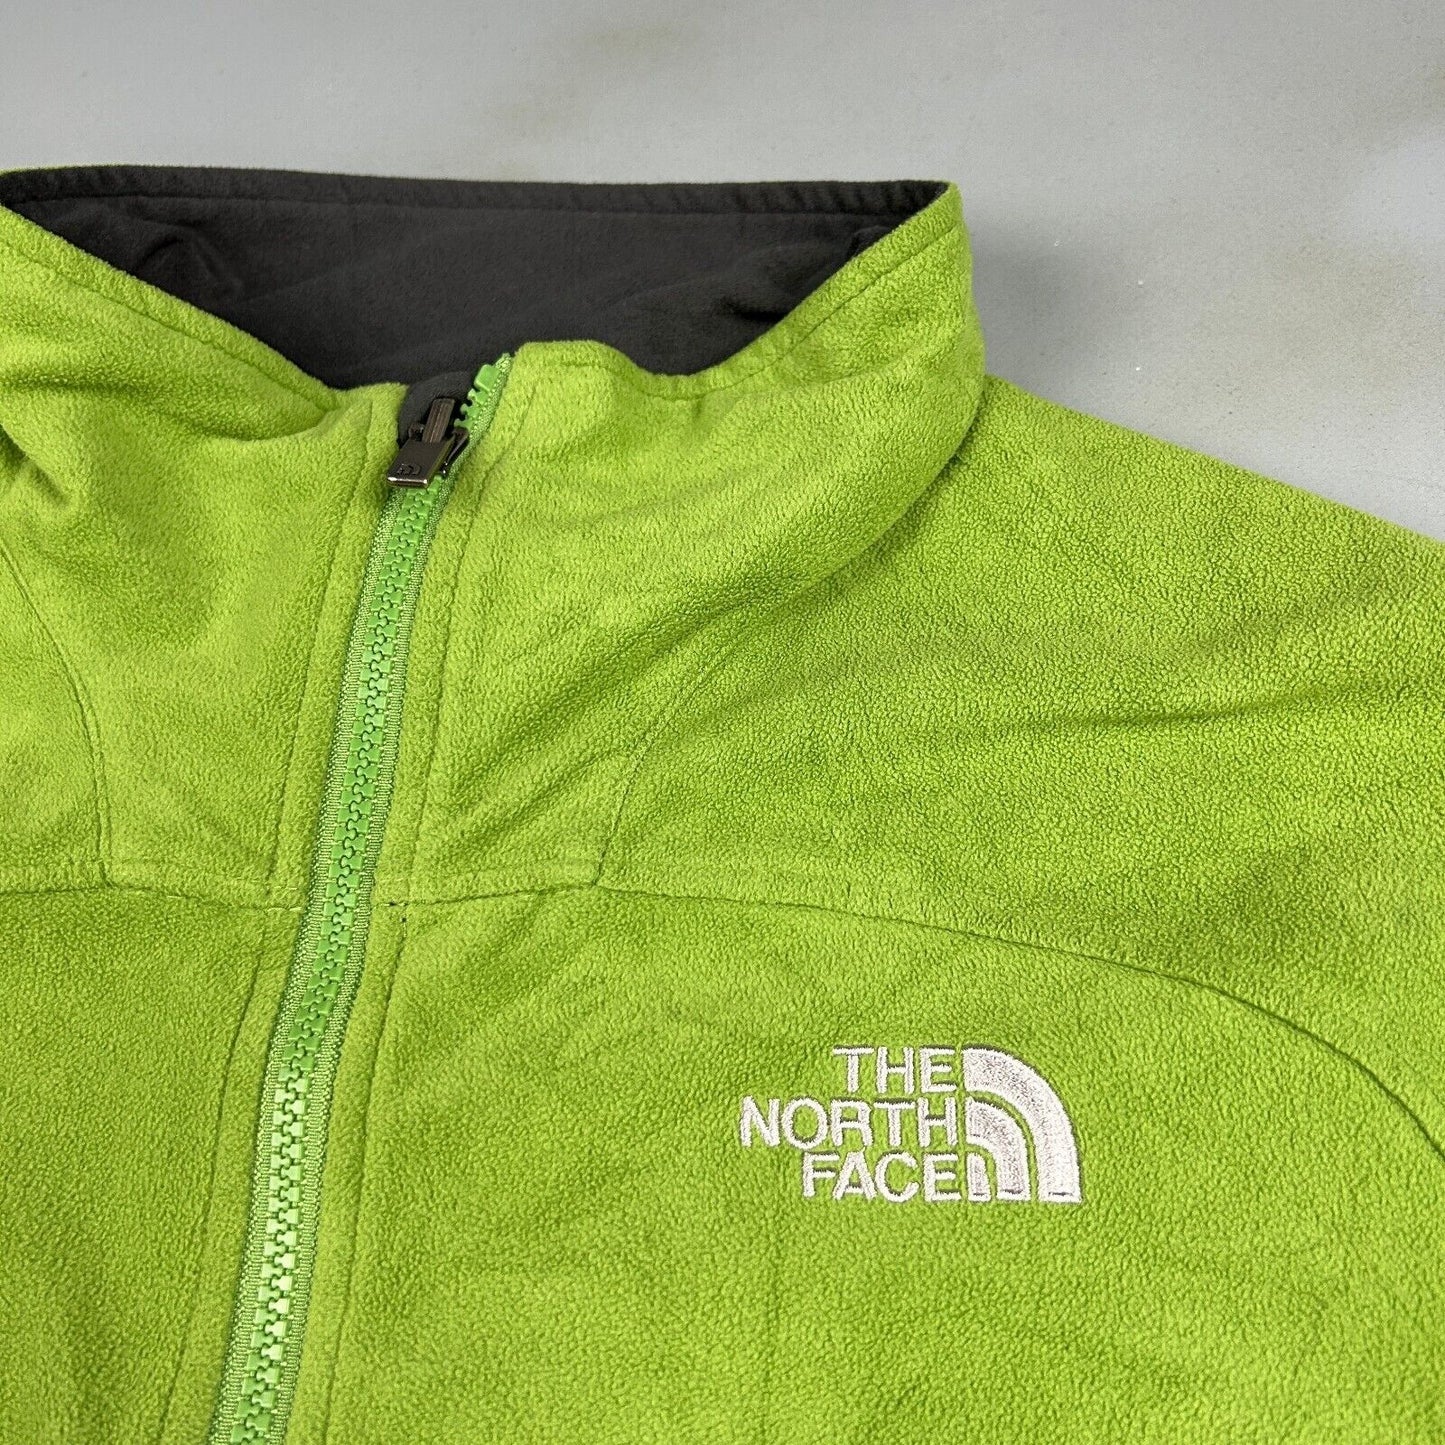 VINTAGE The North Face Green Full Zip Tech Fleece Sweater sz L-XL Adult